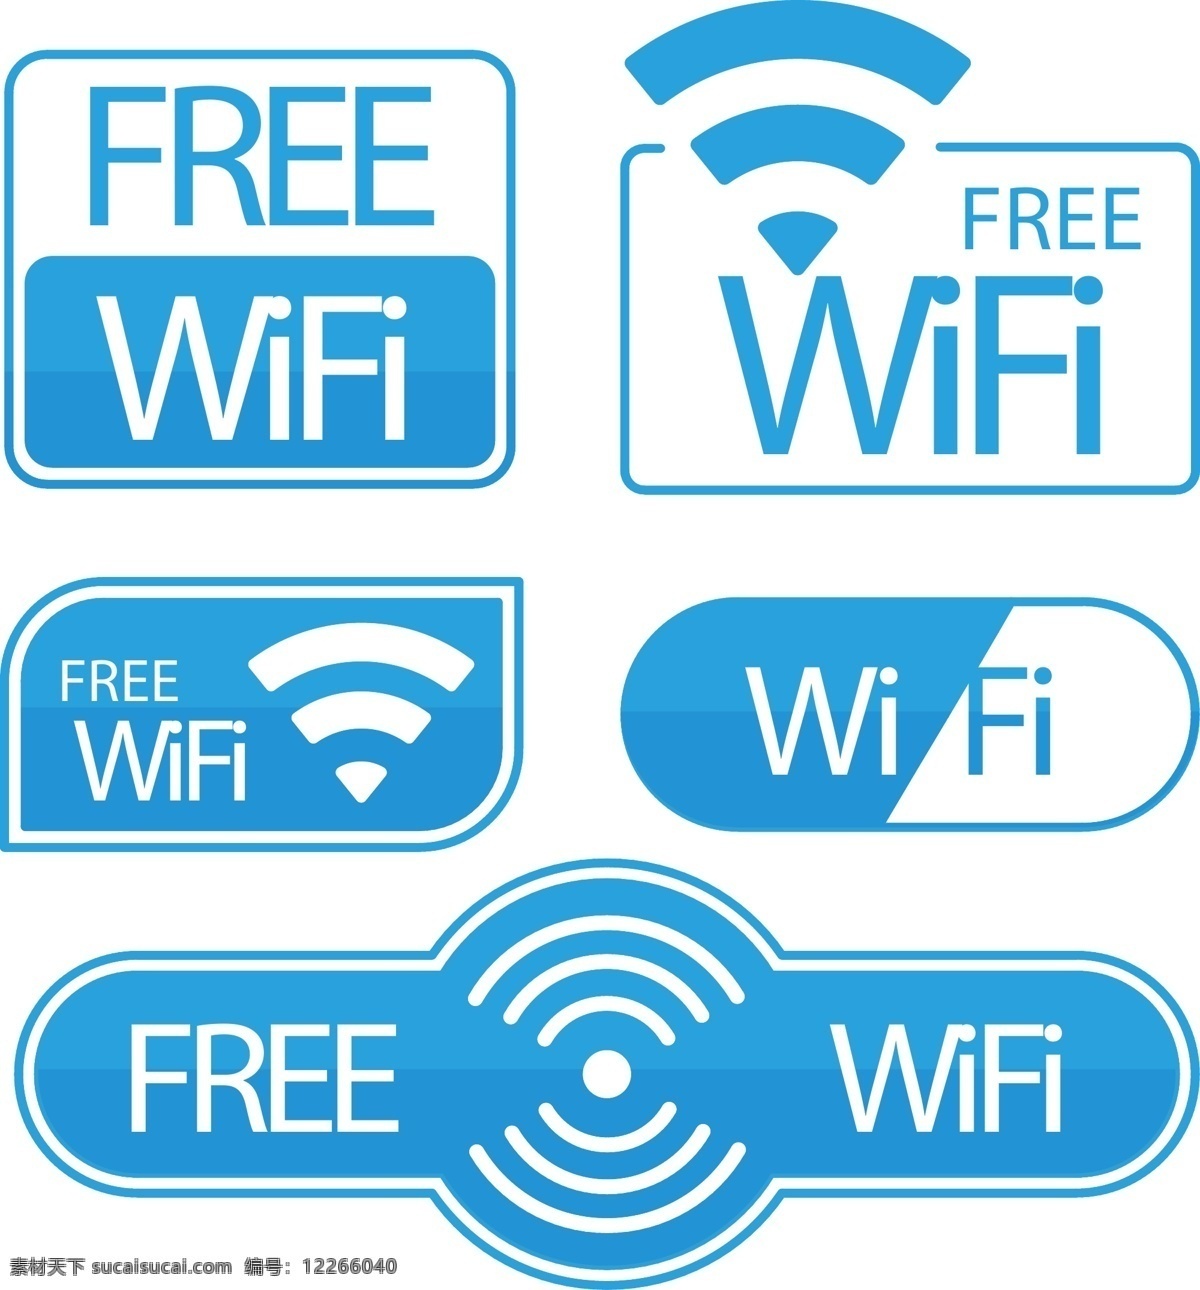 wifi 共享 标识 网络信号 信号图 wifi图表 信号 信号图标 路由器 共享wifi 图标 手机wifi 彩色 点赞 手势 集合 招贴设计